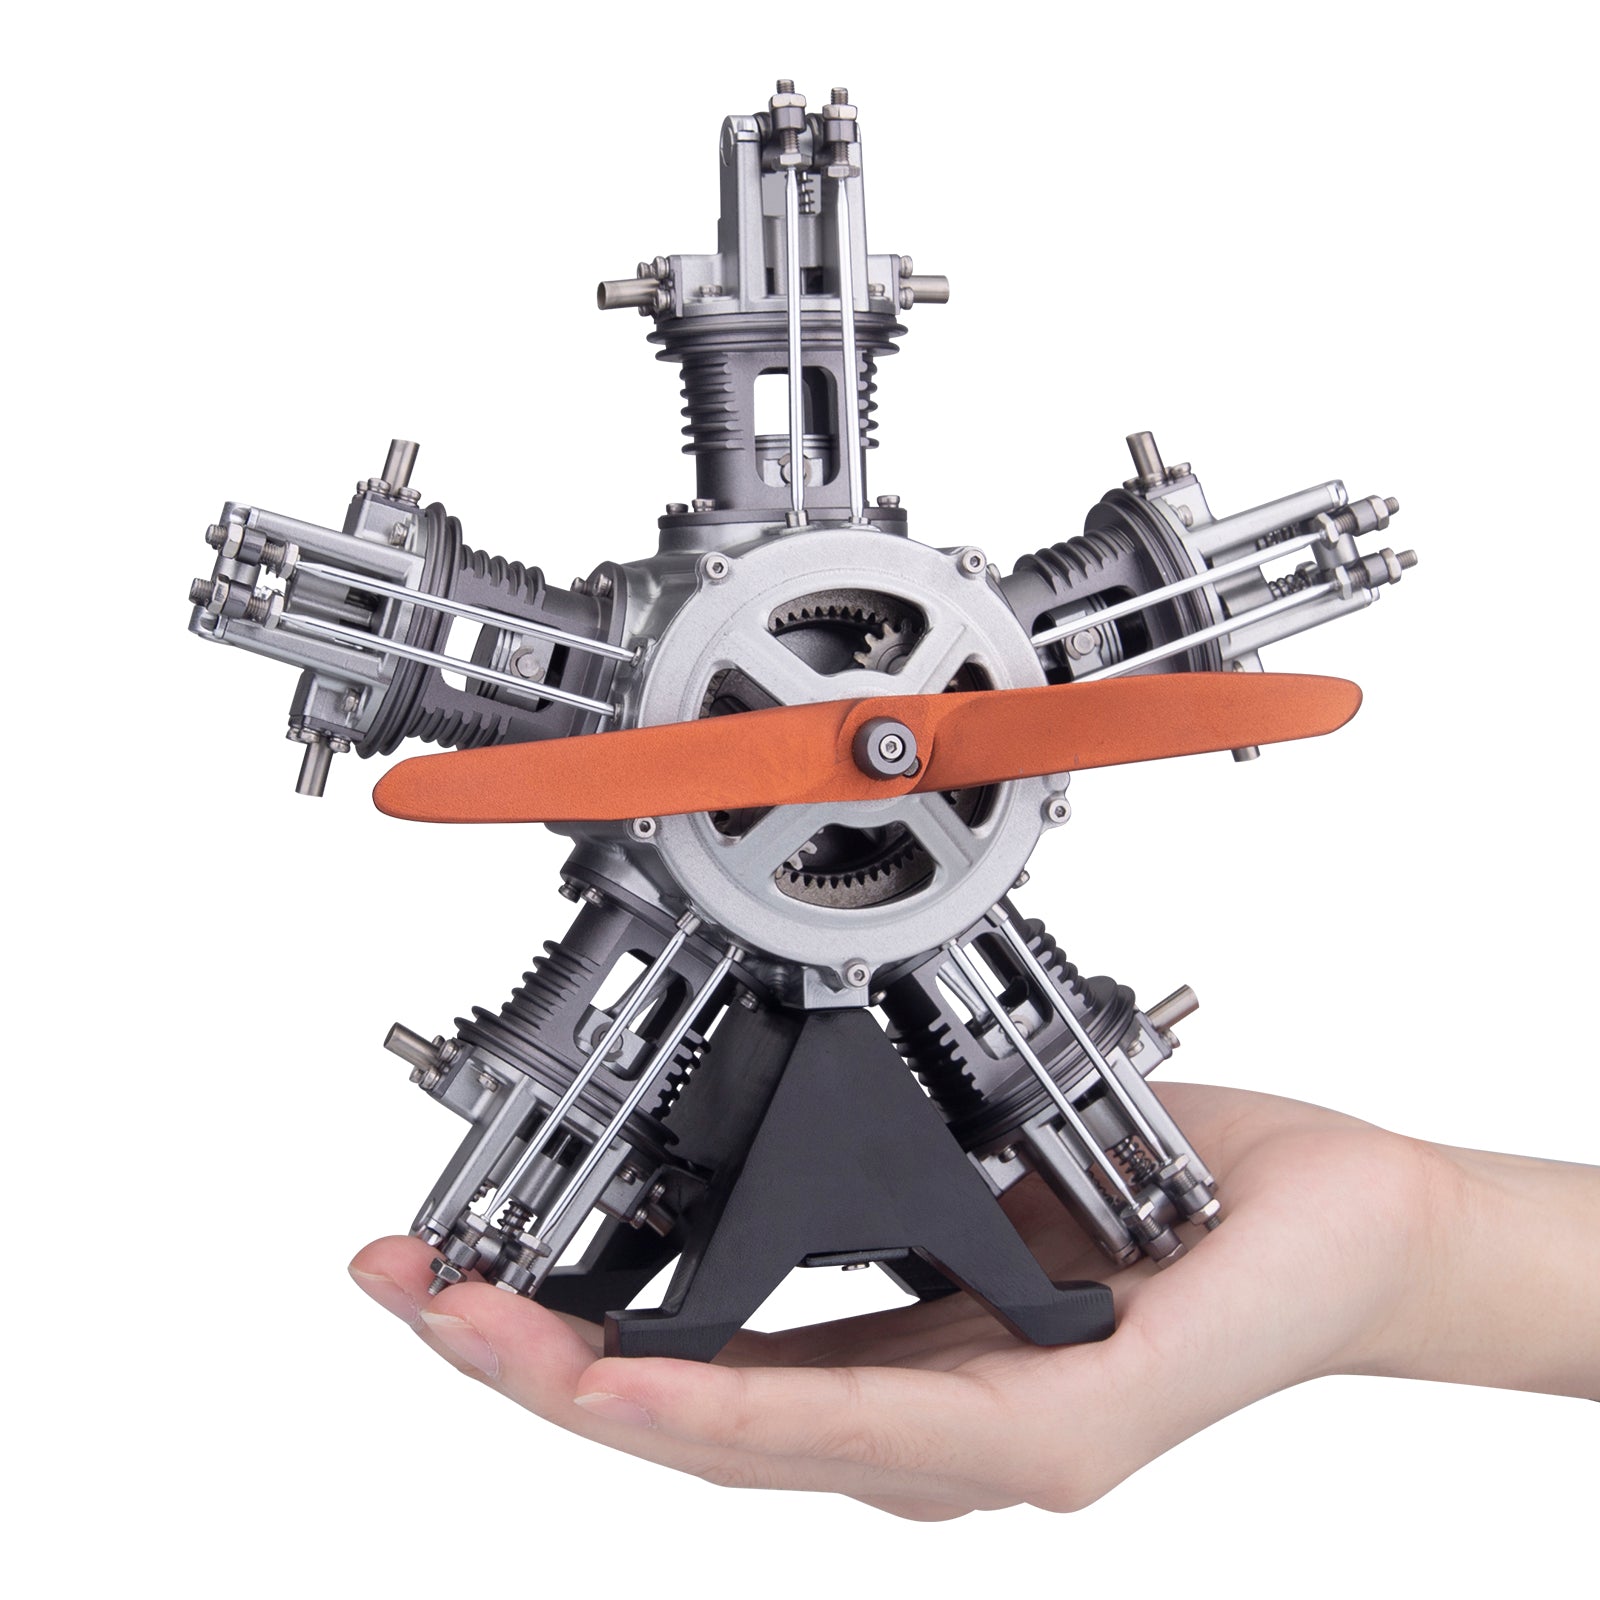 V8 Engine Model Kit that Works - Build Your Own V8 Engine - TECHING 1:–  EngineDIY